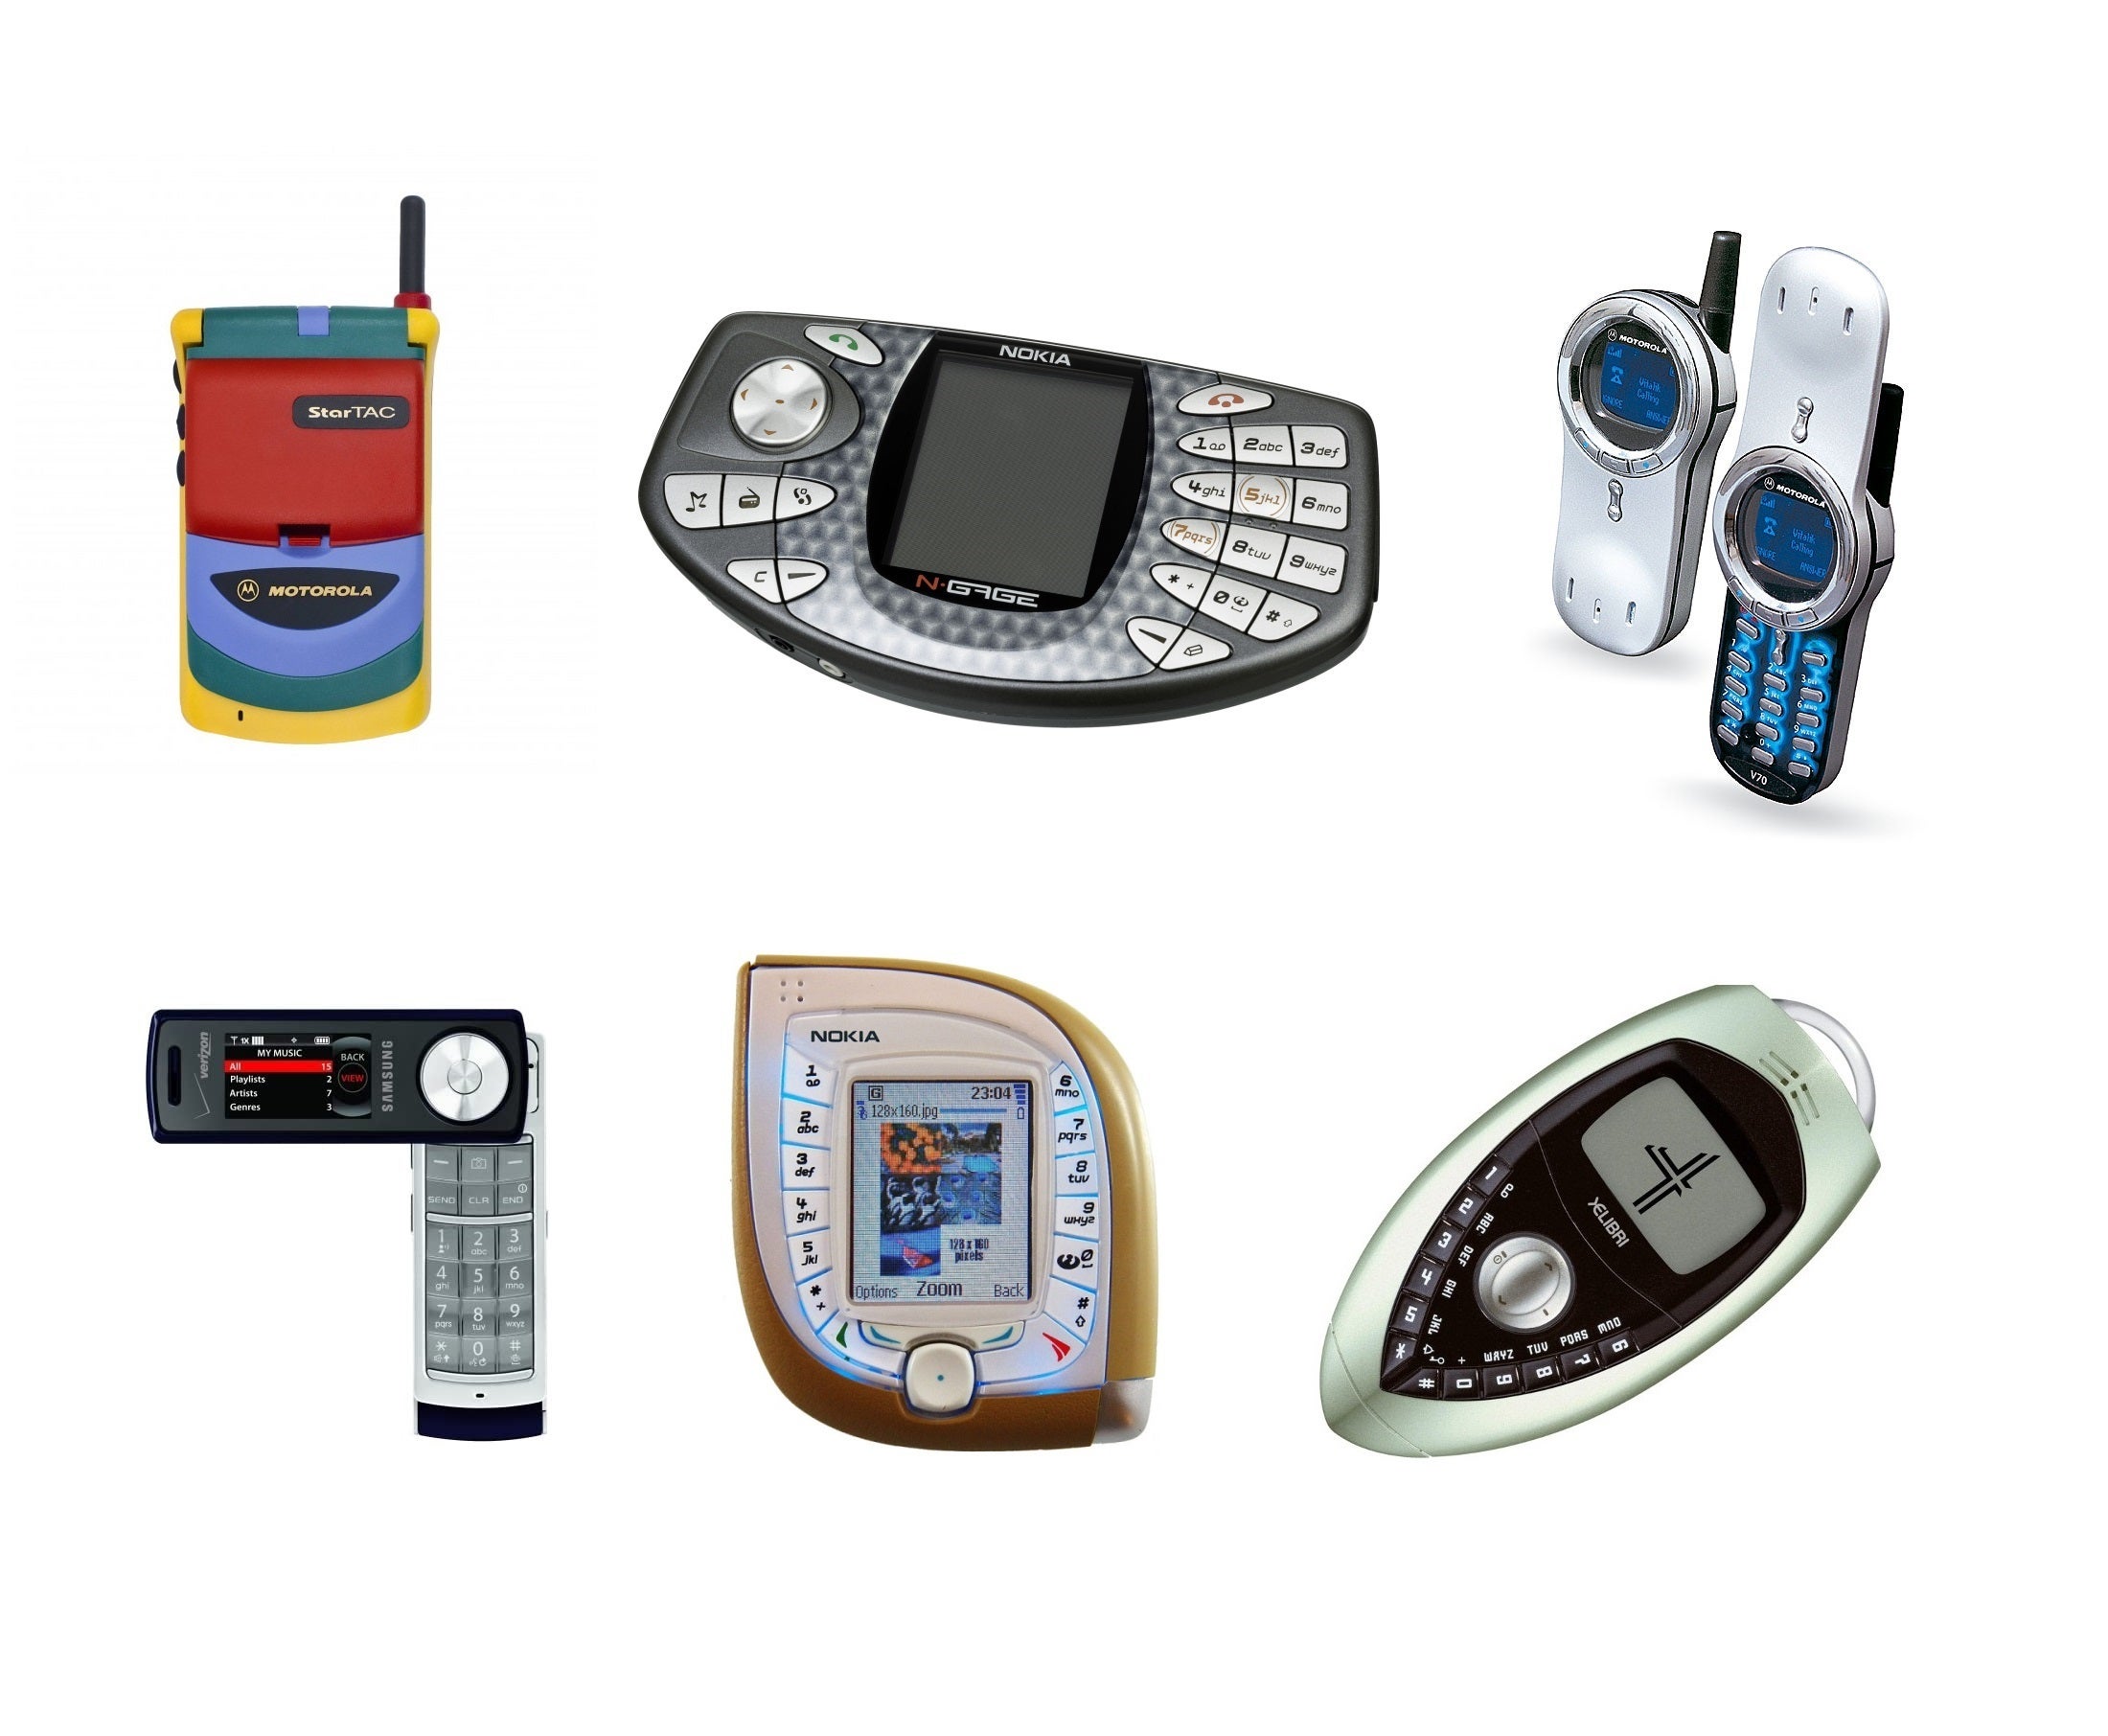 On the top row - Motorola StarTAC Rainbow, Nokia N-GAGE, Motorola V70; On the bottom - Samsung Juke, Nokia 7600, Siemens Xelibri 4 - Why do all smartphones look the same?